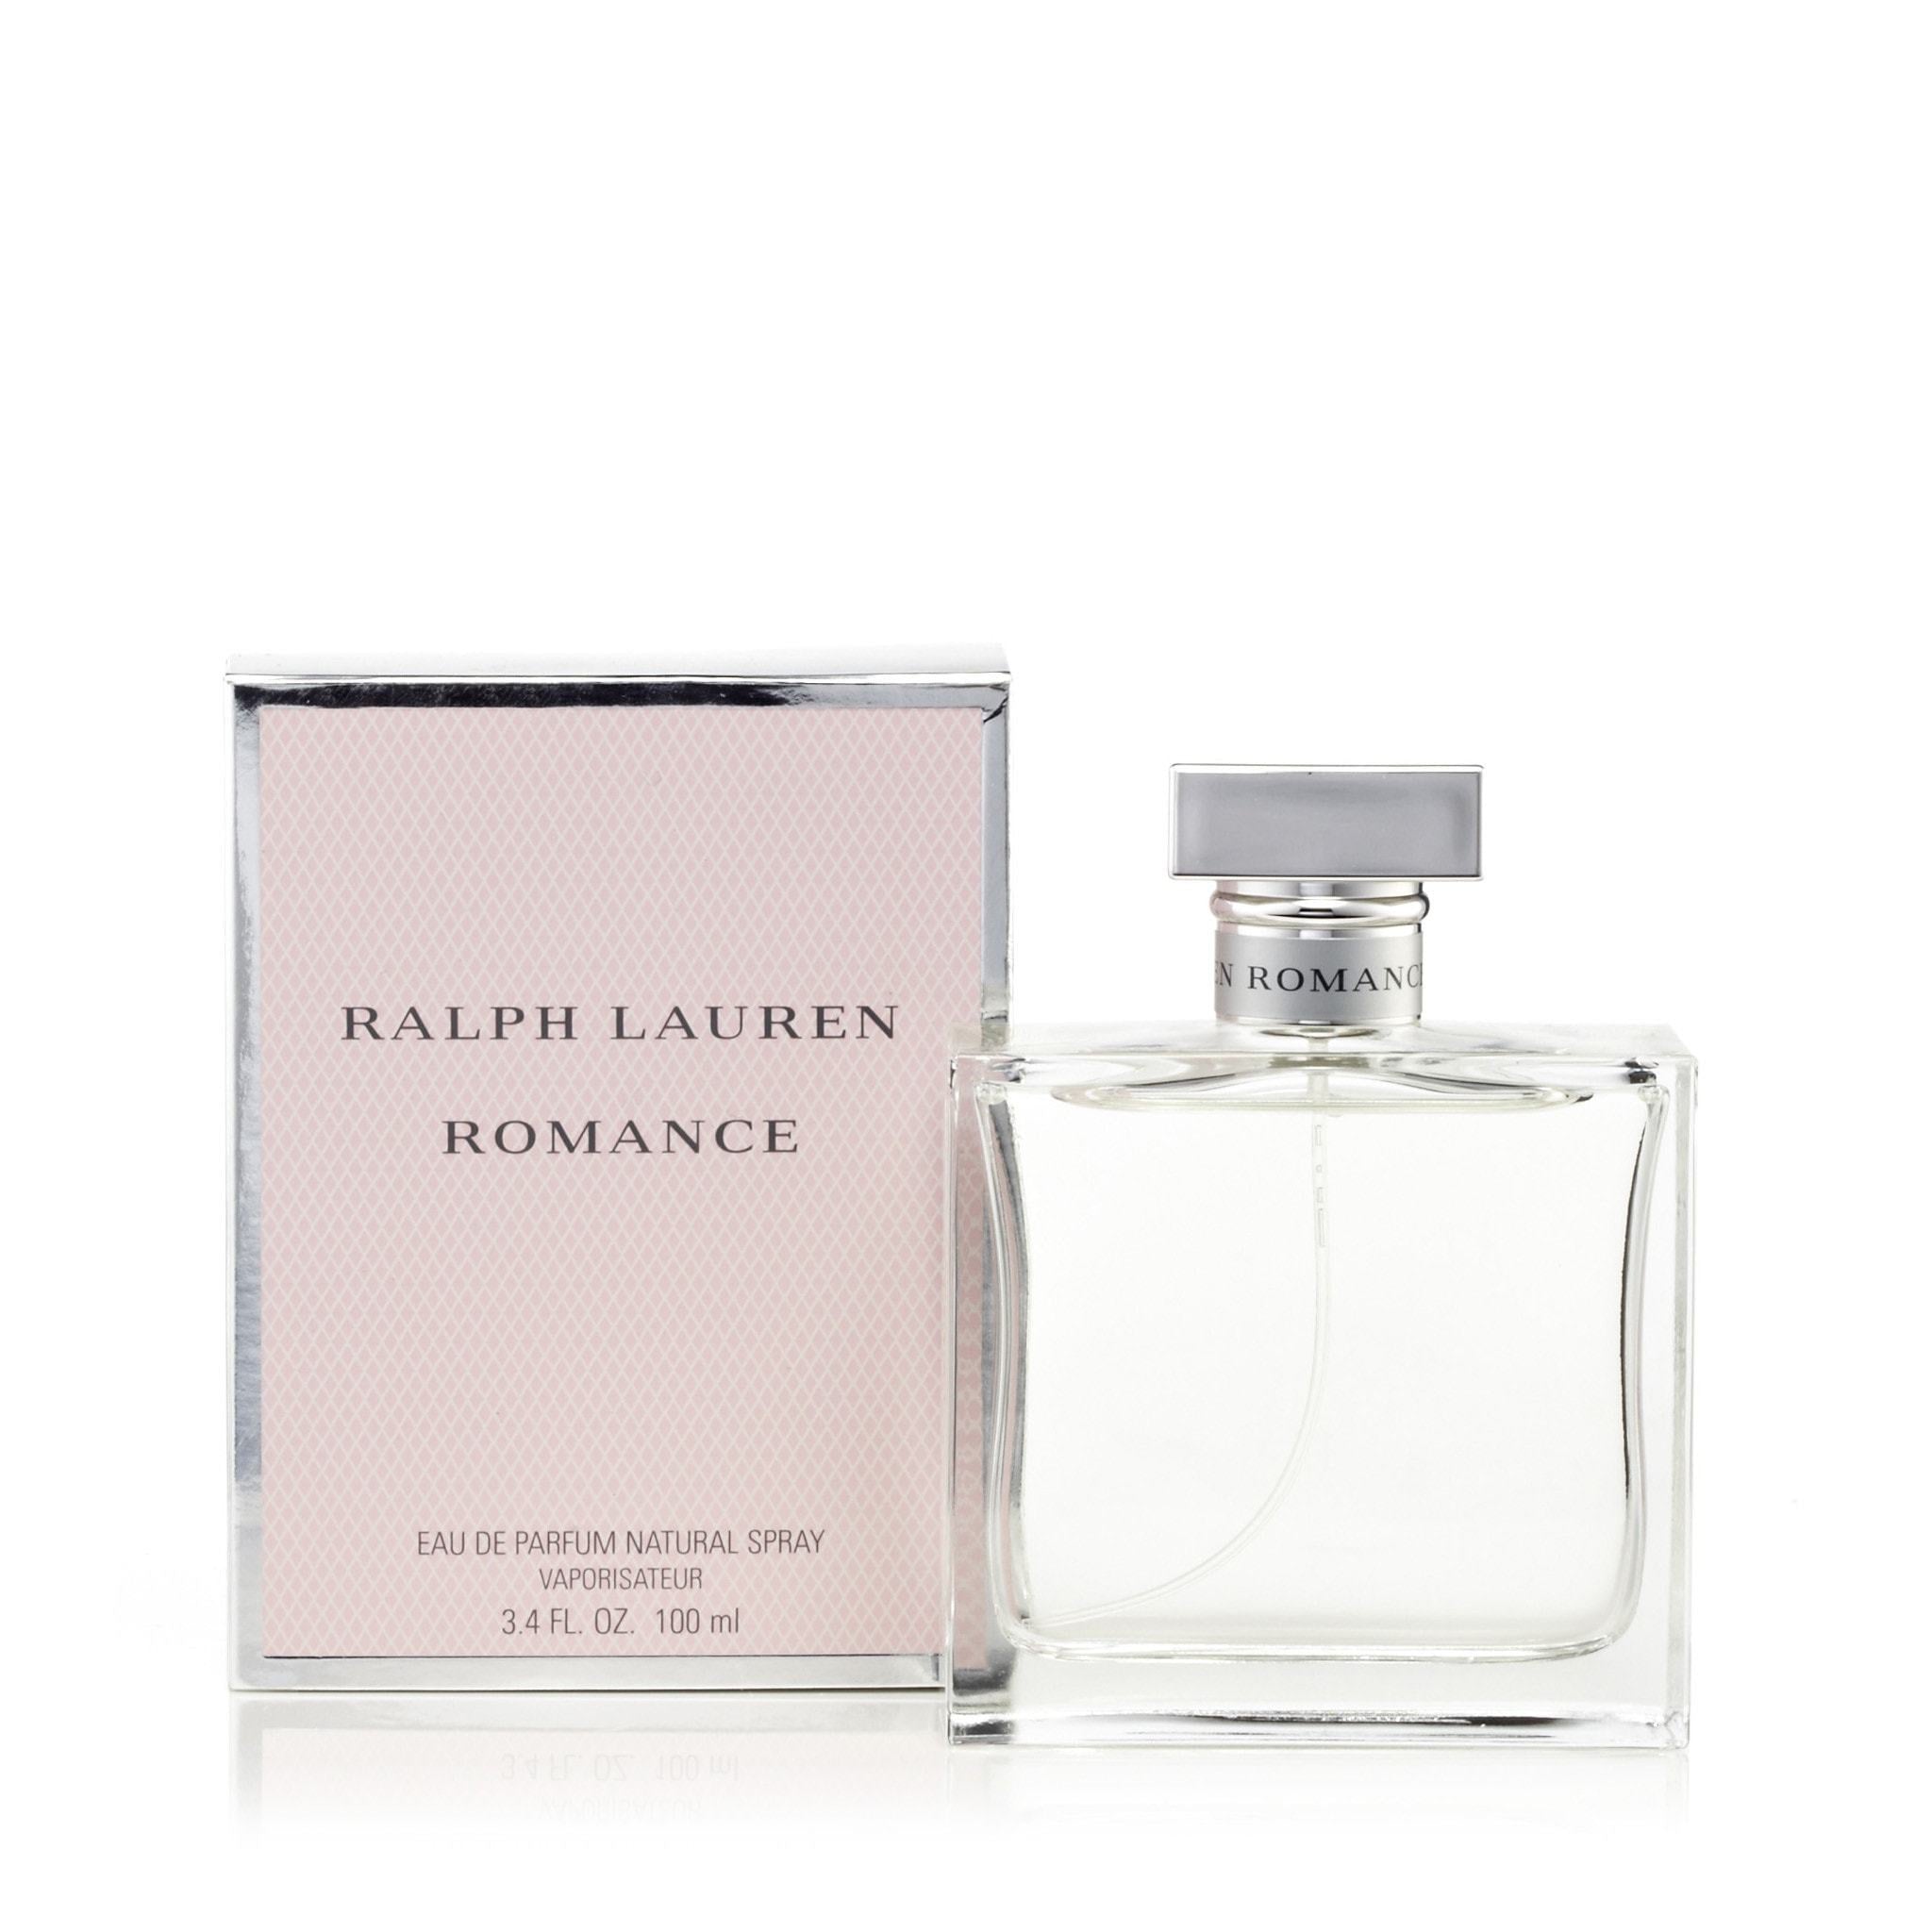 Romance by Ralph Lauren, 1.7 oz EDP Spray for Women